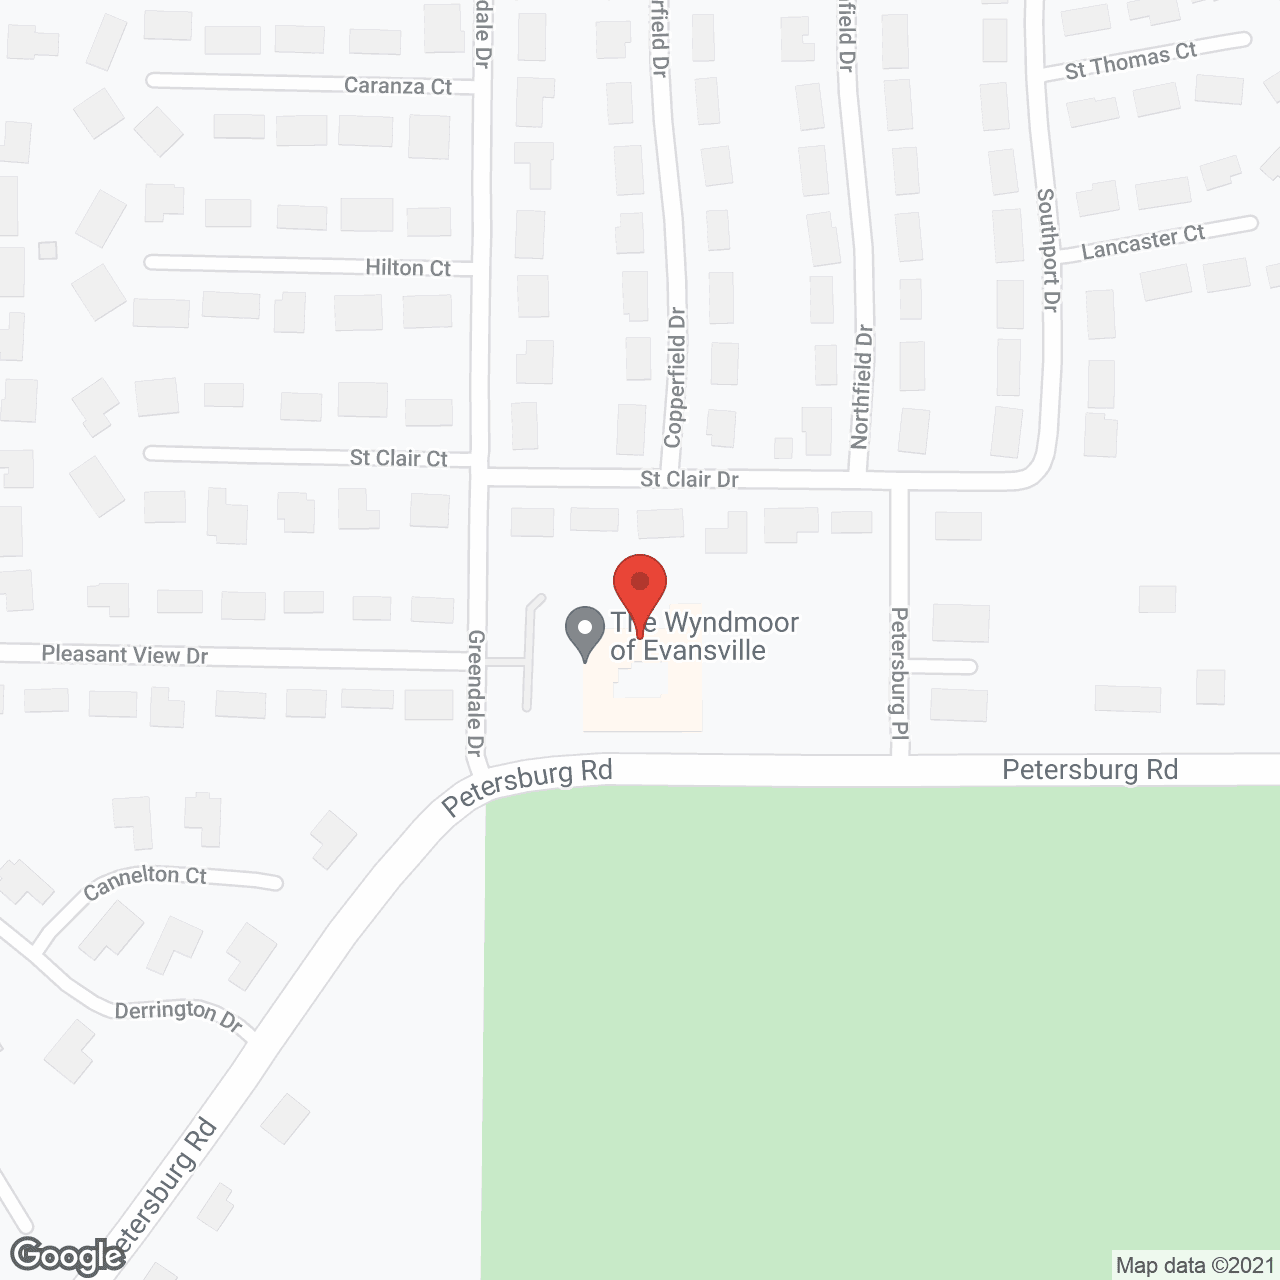 Wyndmoor of Evansville in google map